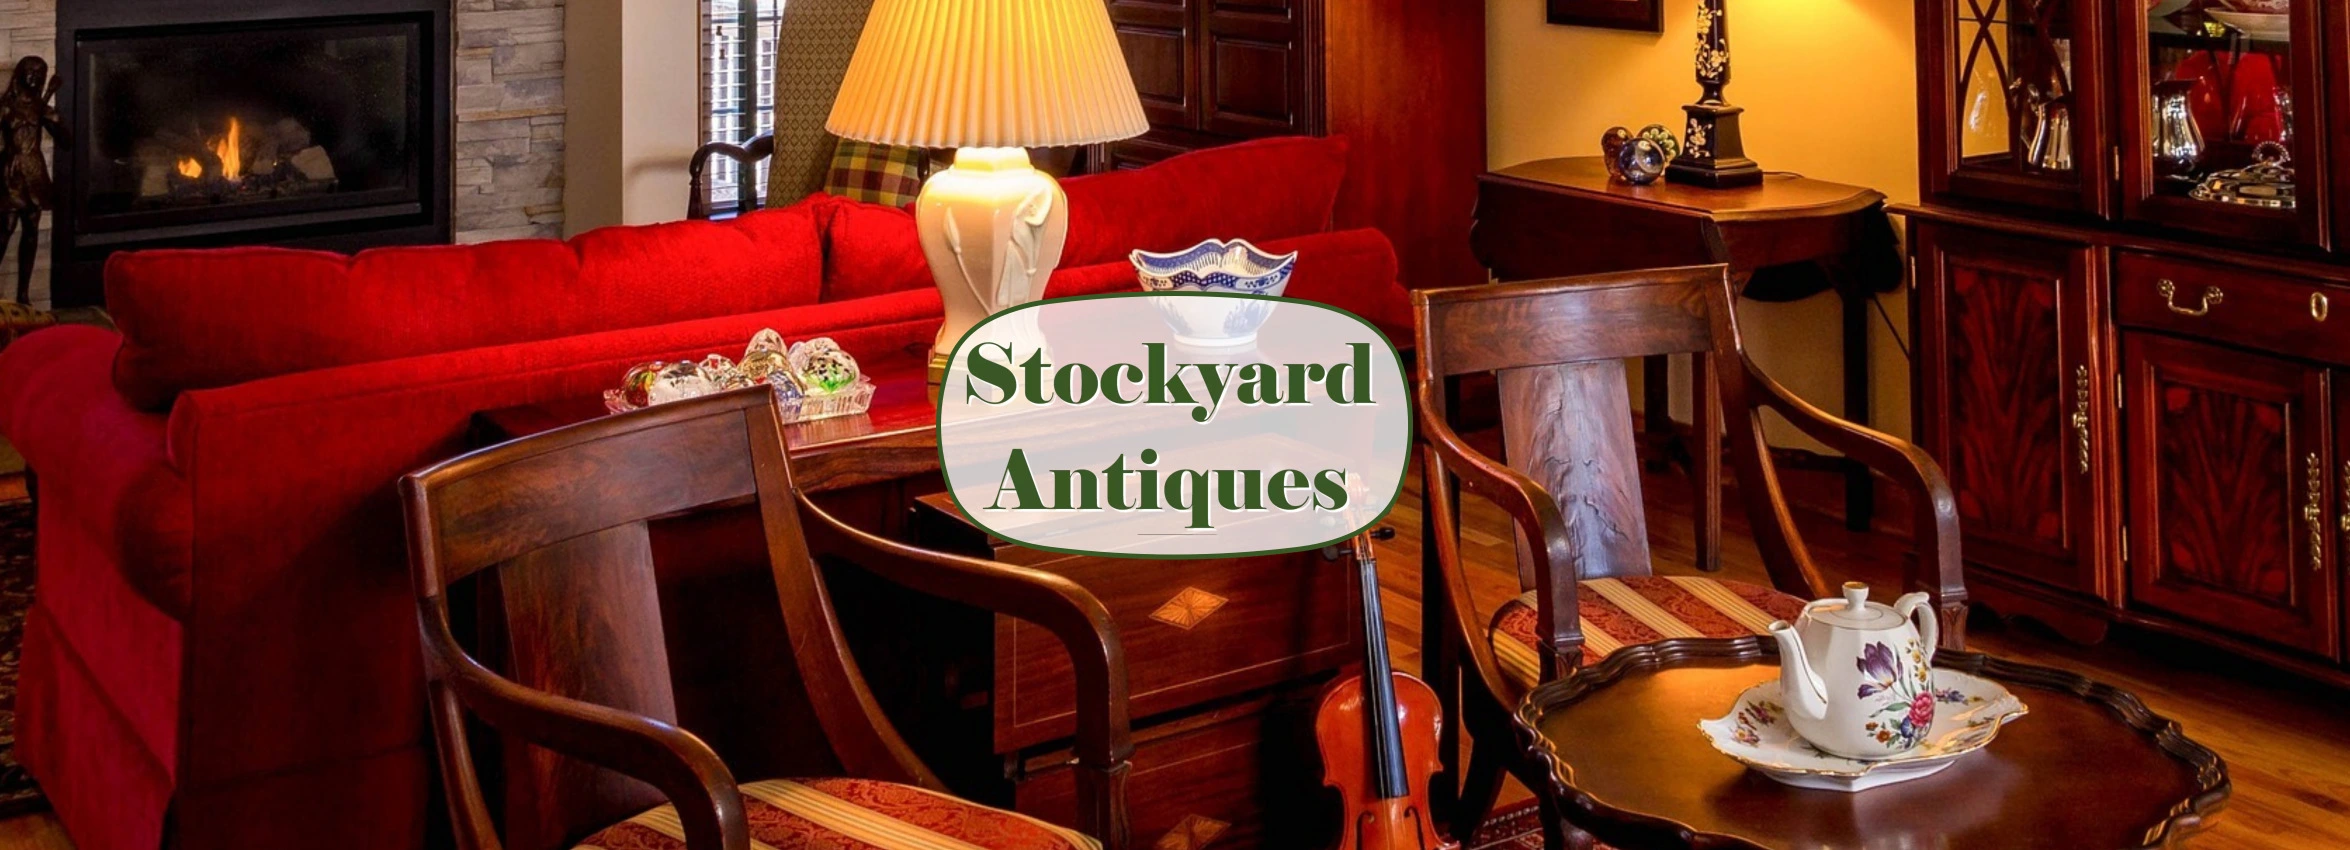 Stockyard-Antiques_Desktop_ET